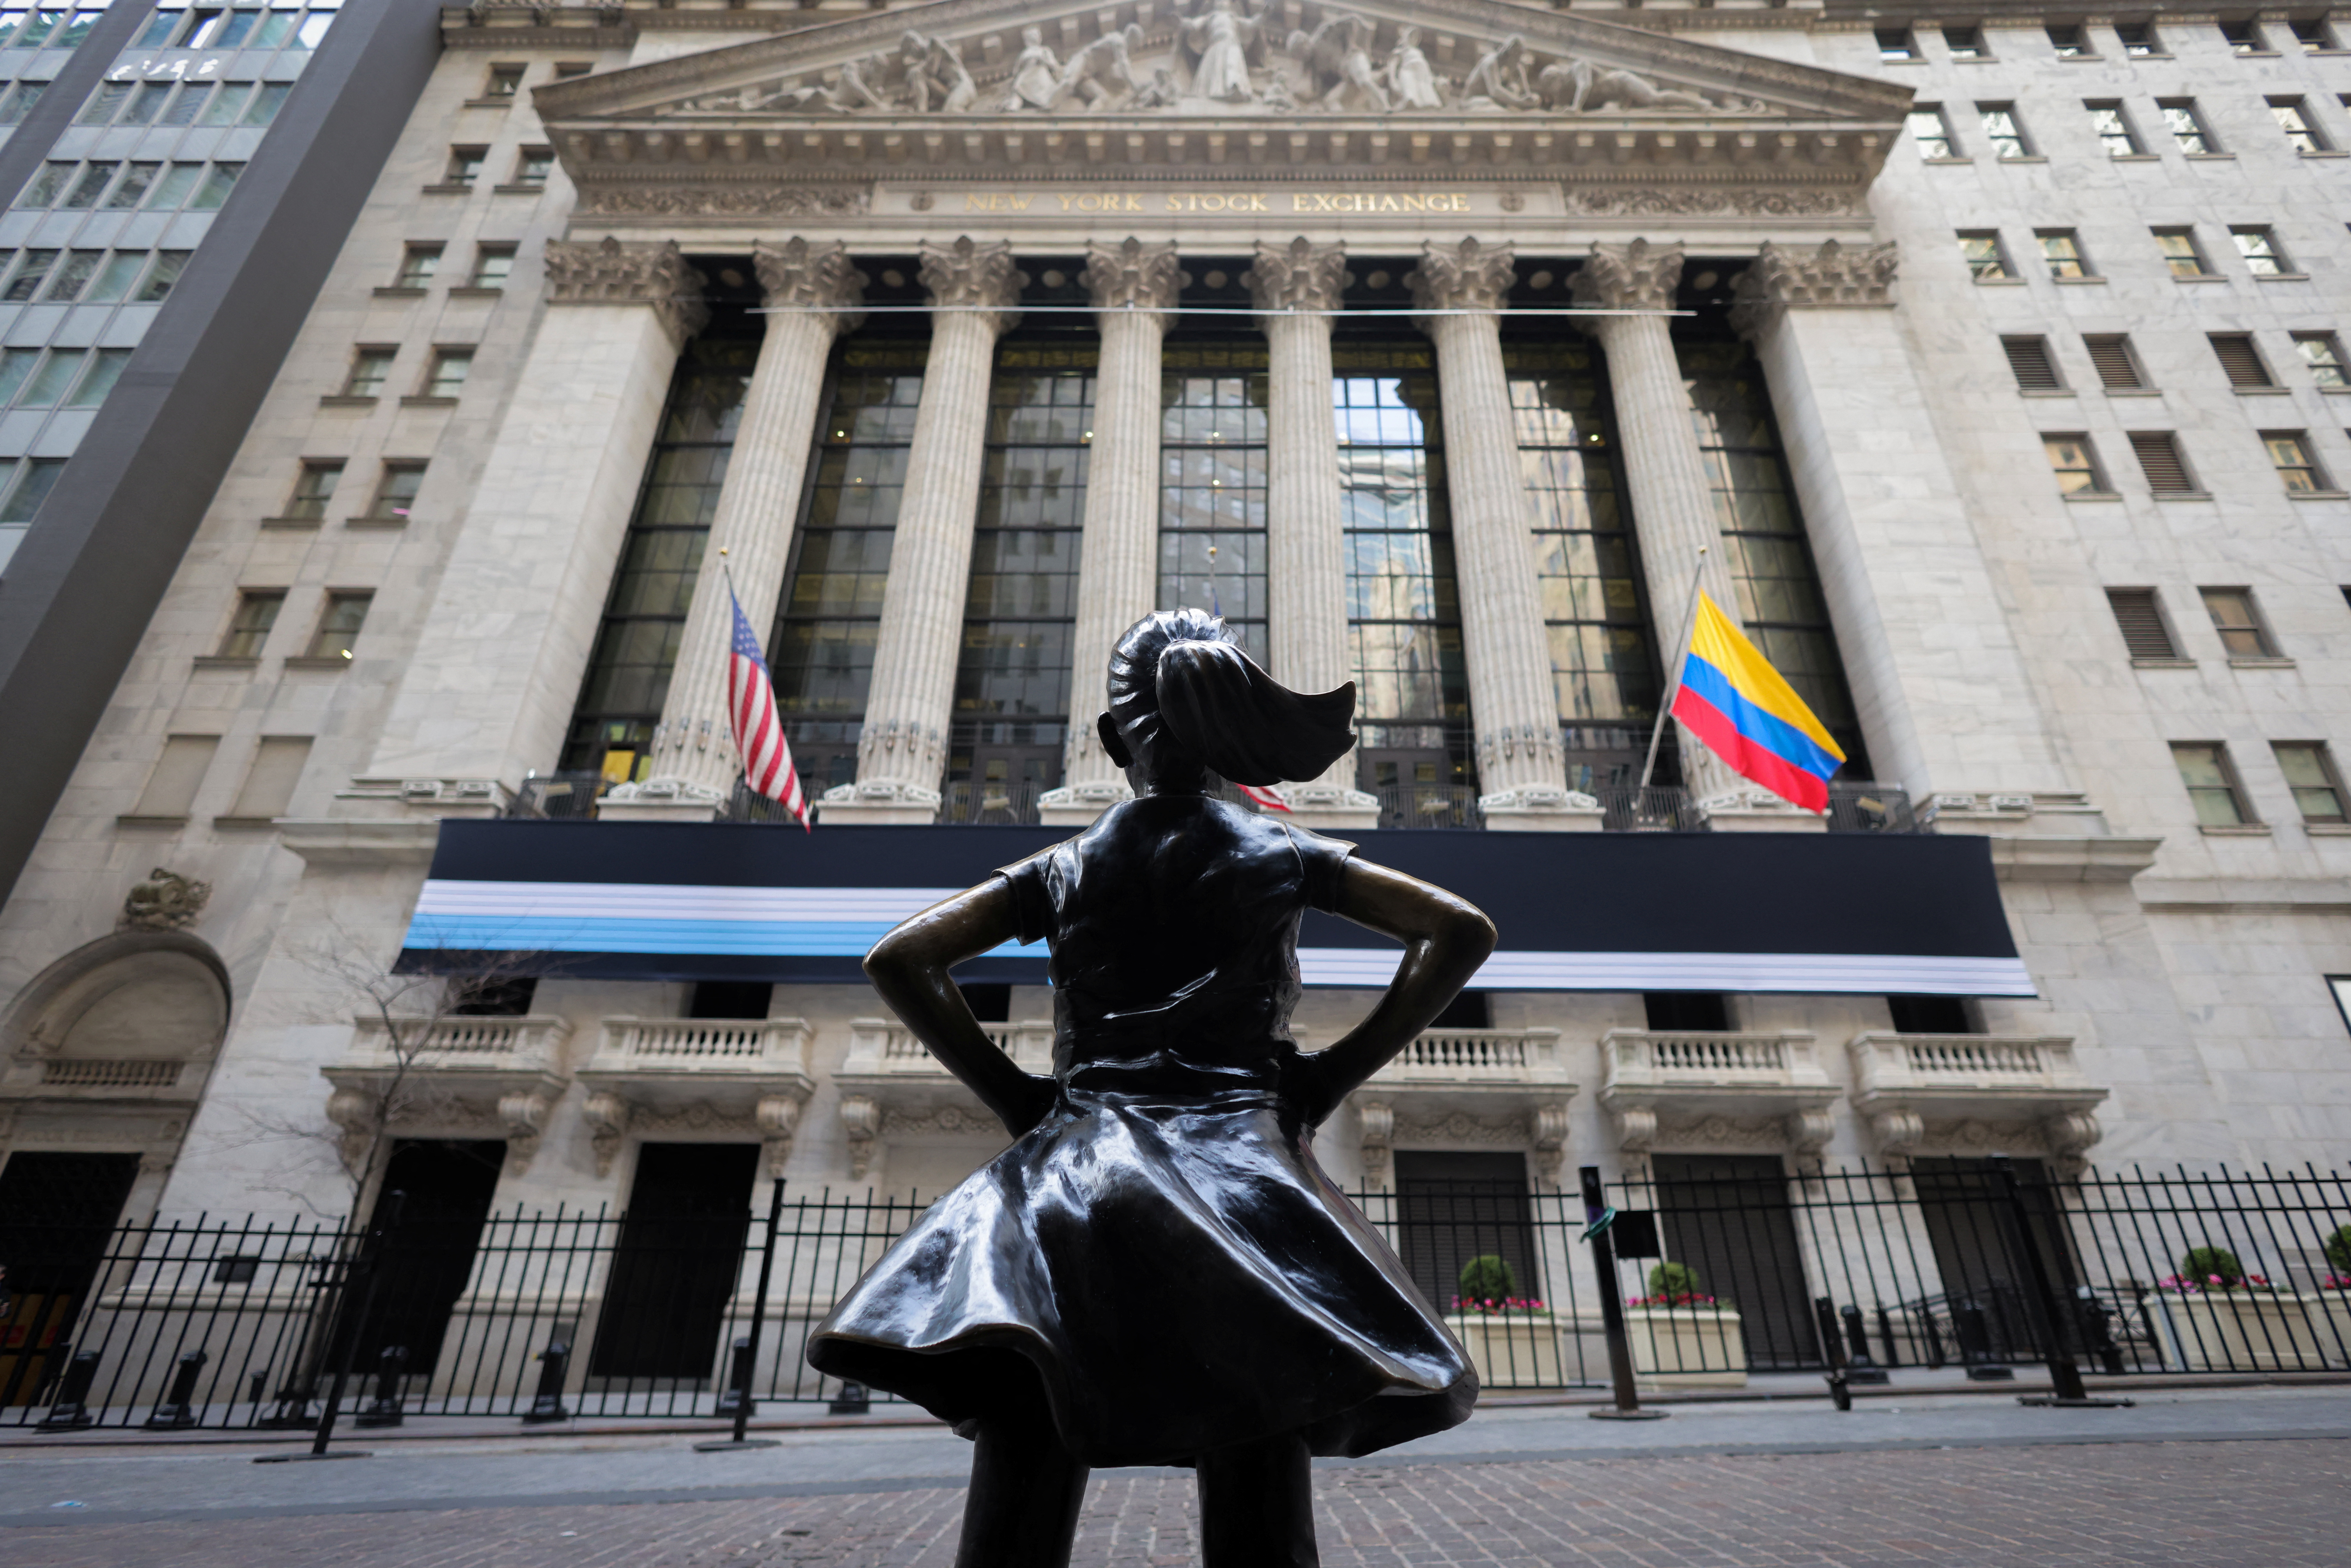 Fearless Girl Statue by artist Kristen Visbal outside of the New York Stock Exchange (NYSE) in Manhattan, New York City